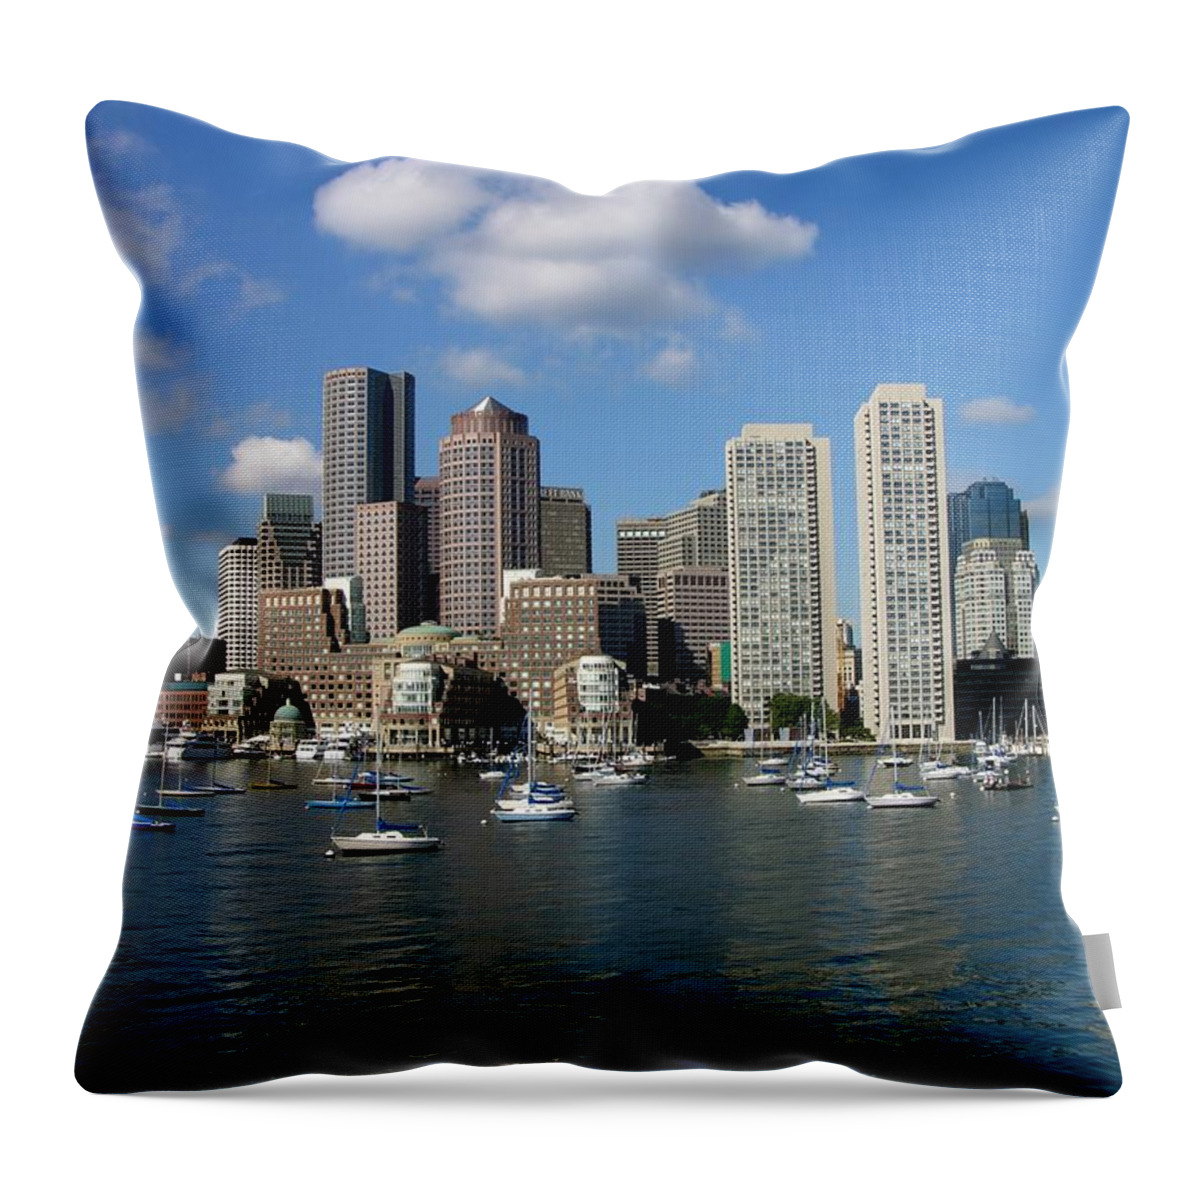 Boston Throw Pillow featuring the photograph Boston Habor Skyline by Keith Stokes